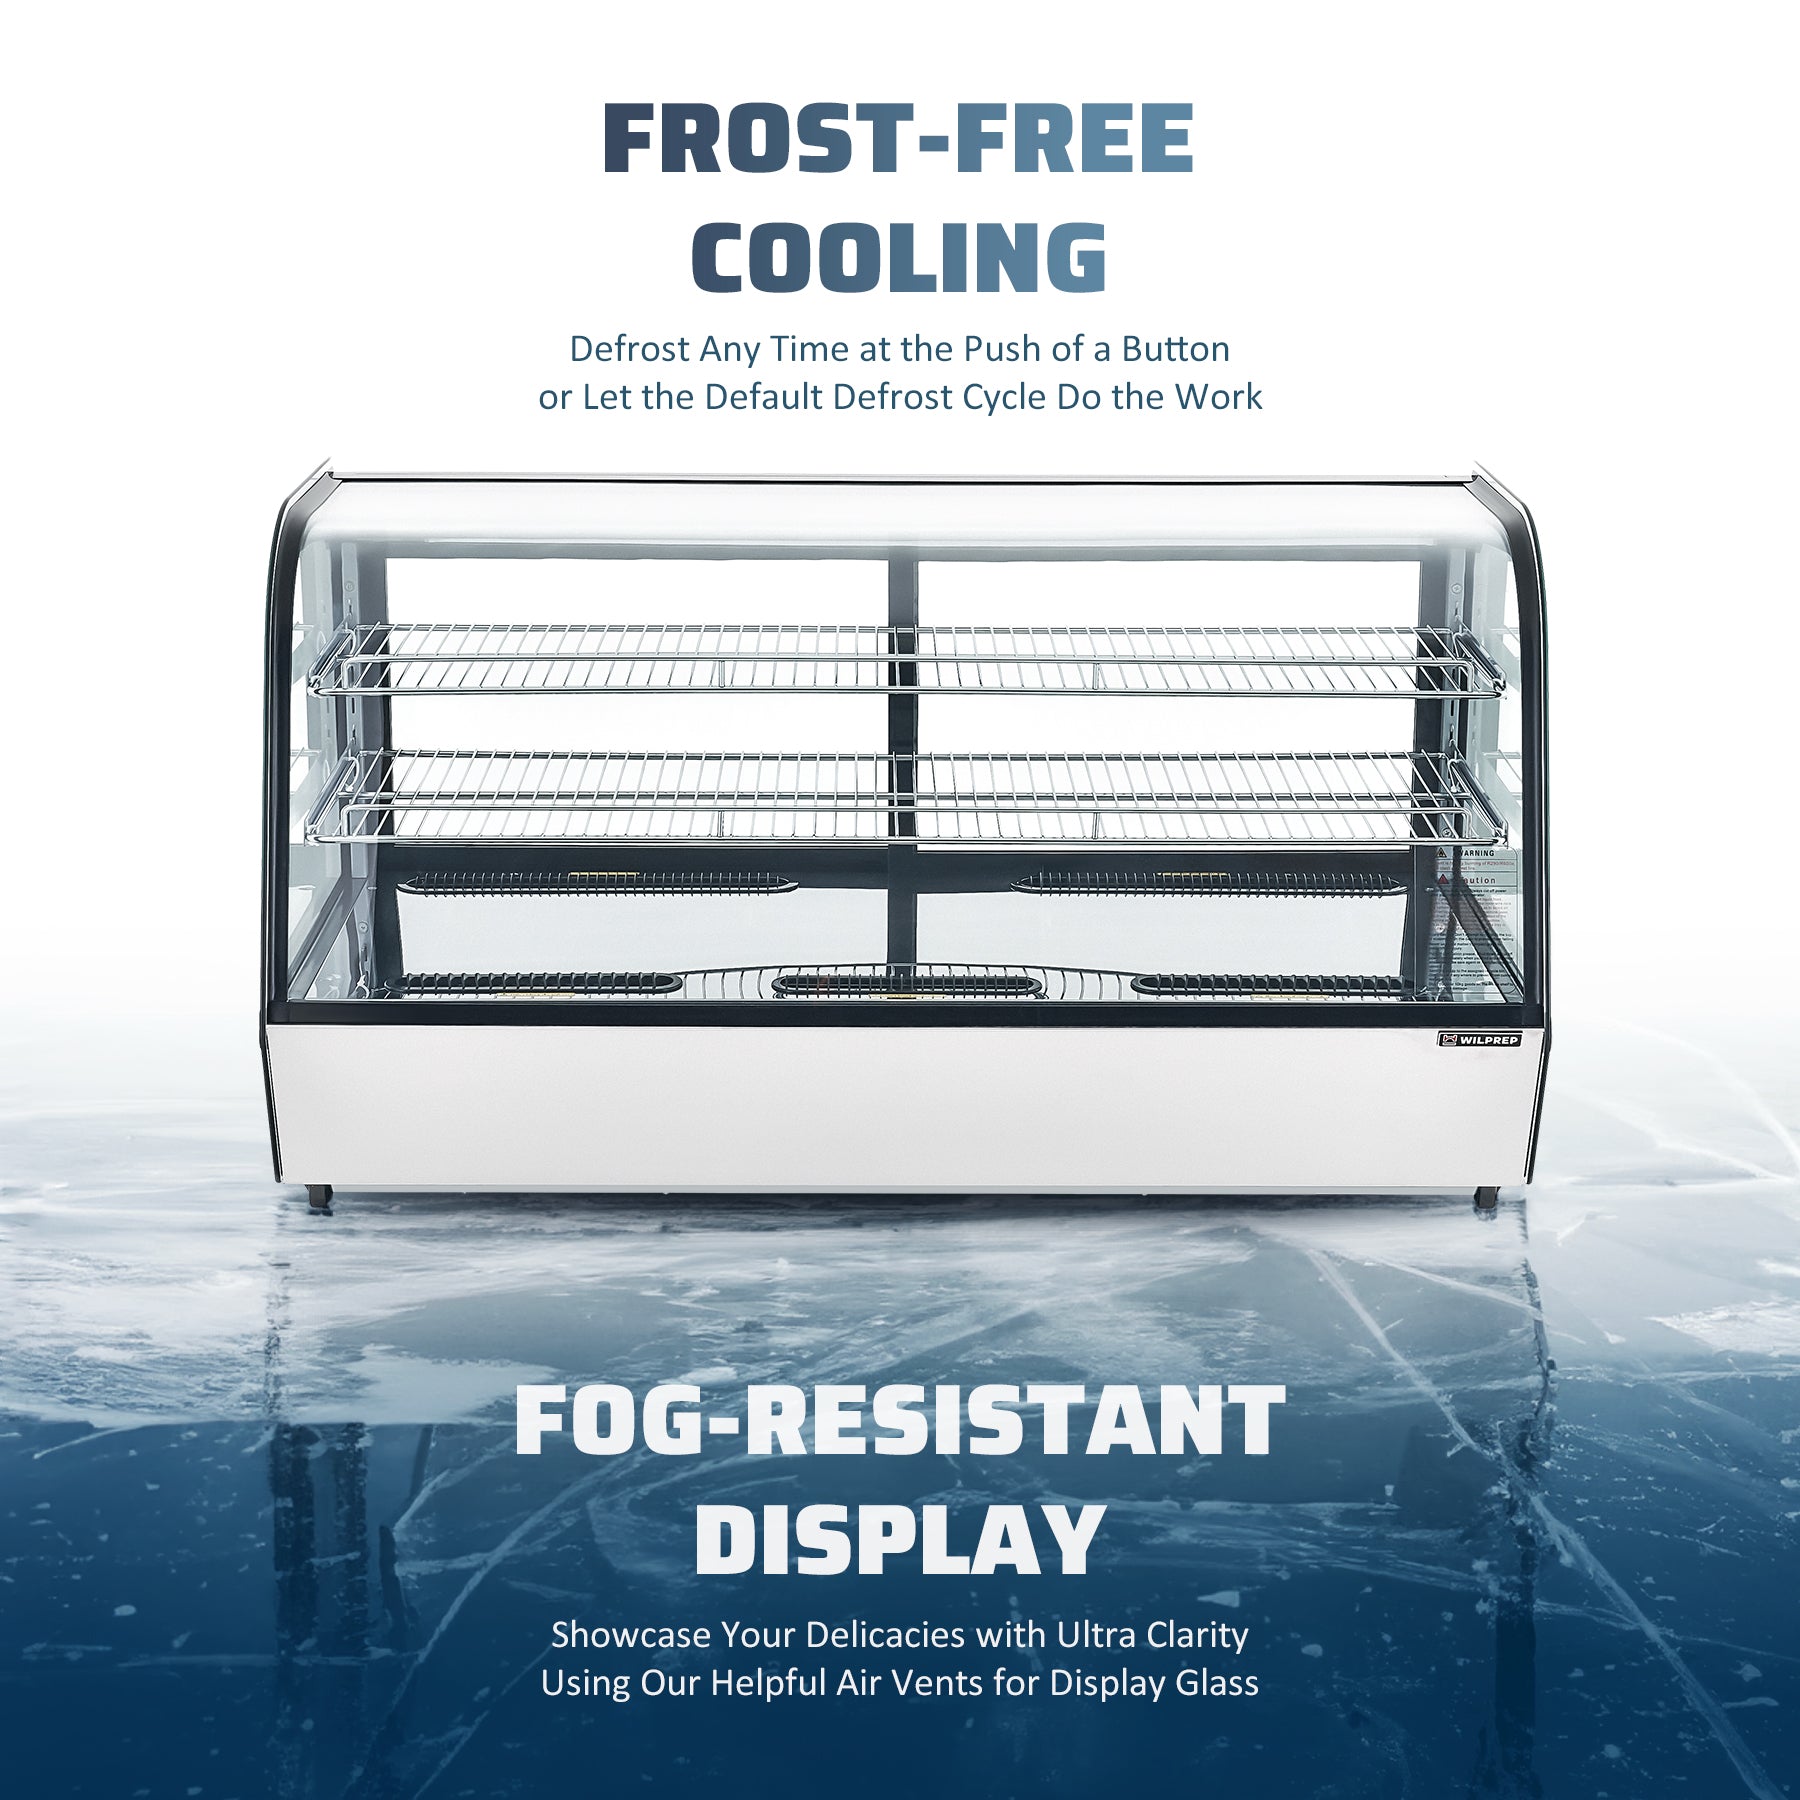 Wilprep 48-inch countertop display refrigerator froist free